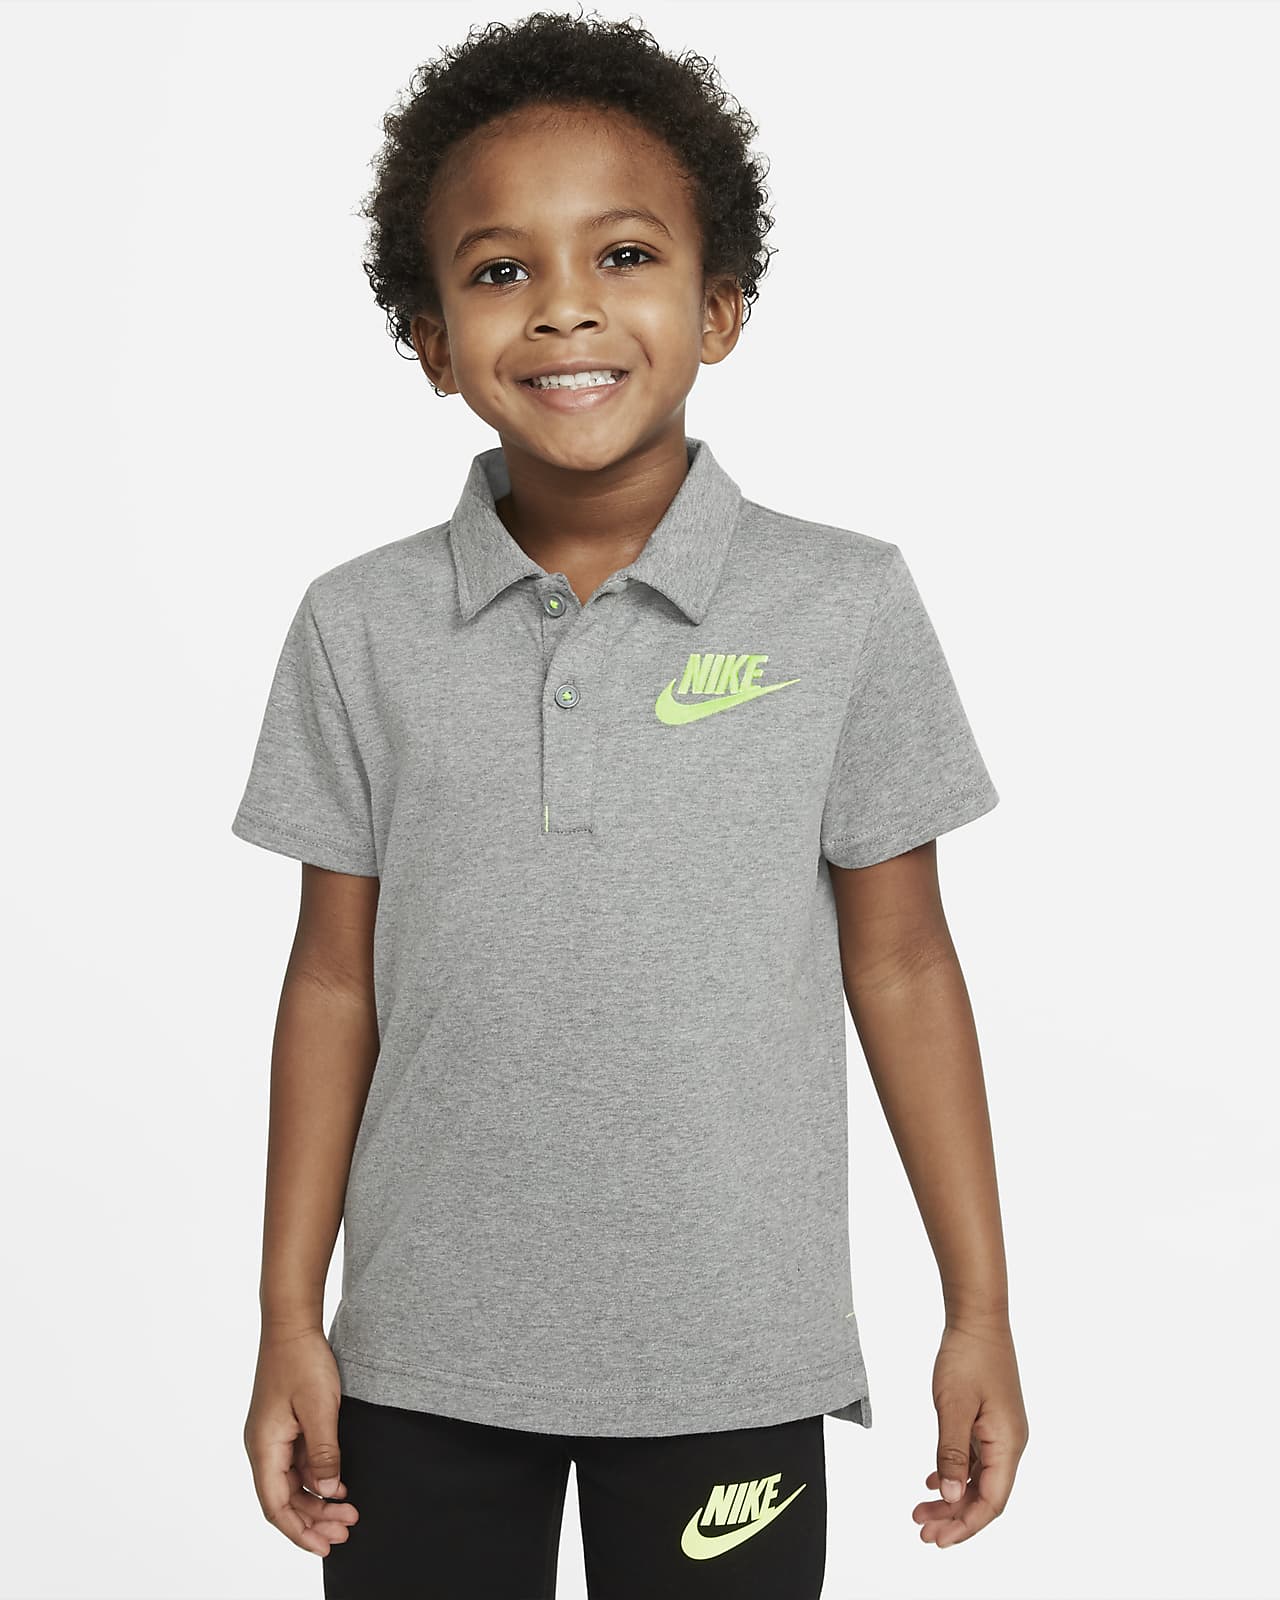 Nike Dri-FIT Little Kids' Polo Top